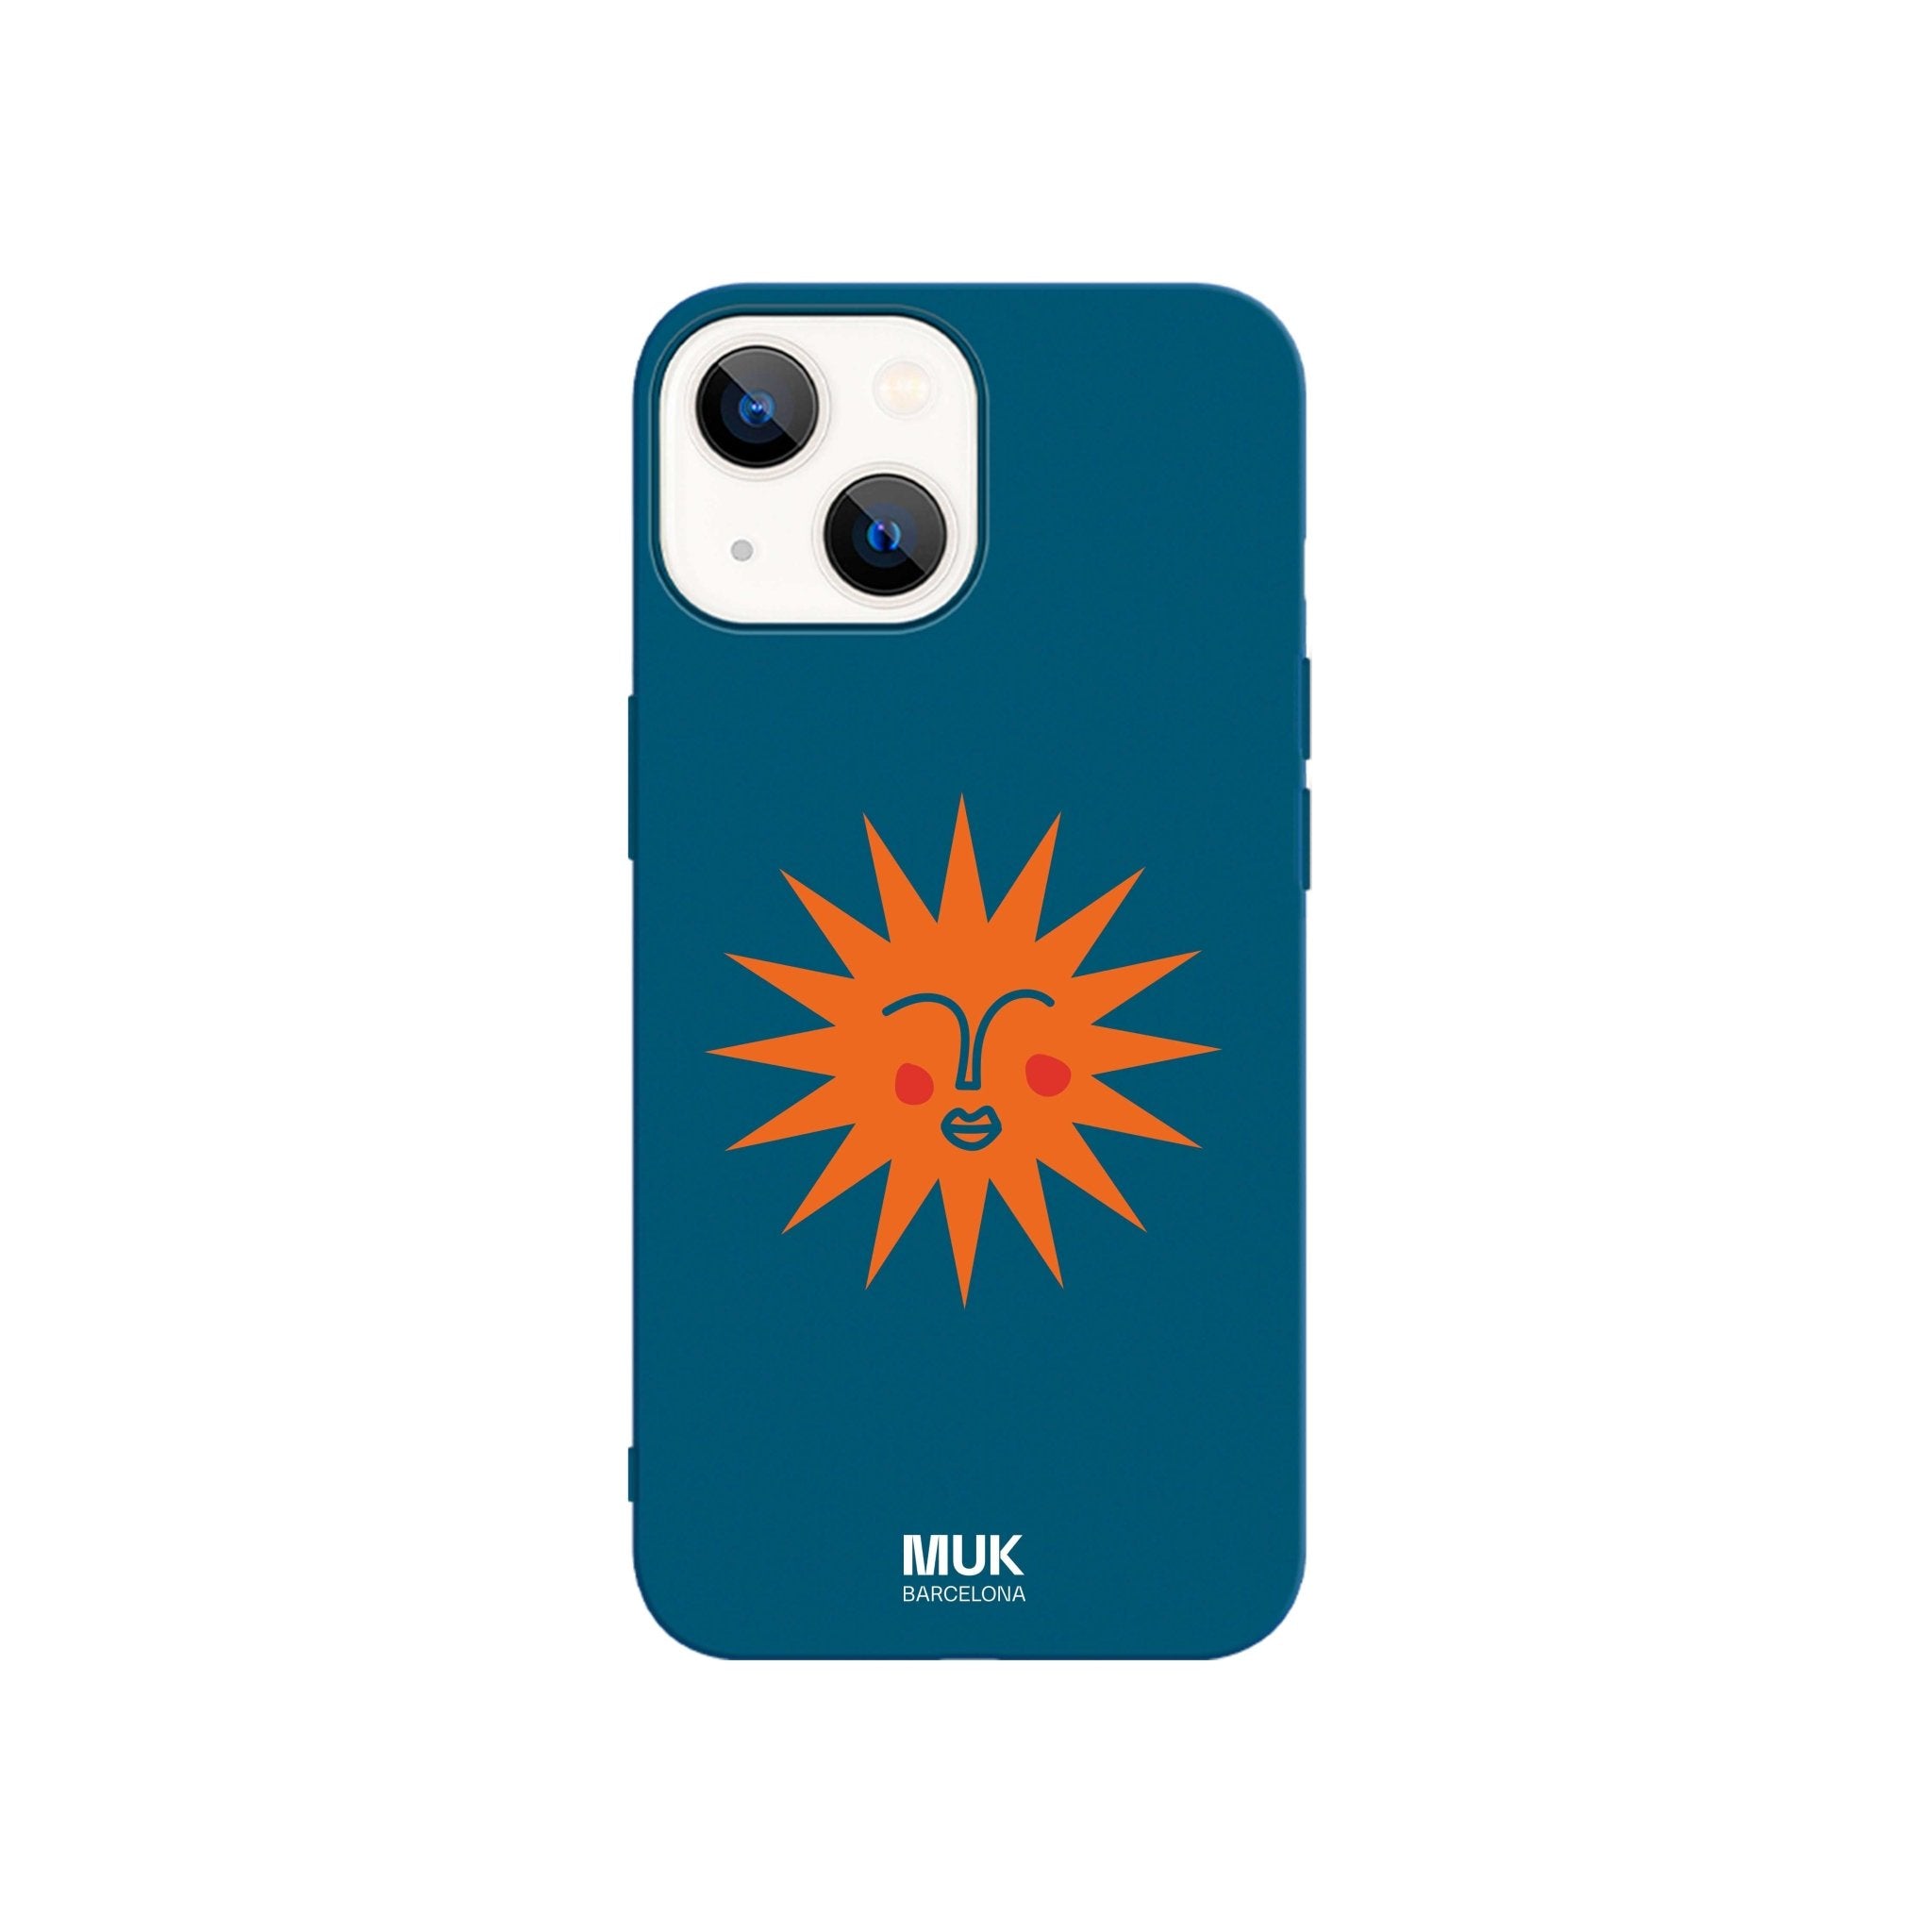 Blue TPU phone case with orange sun design.
